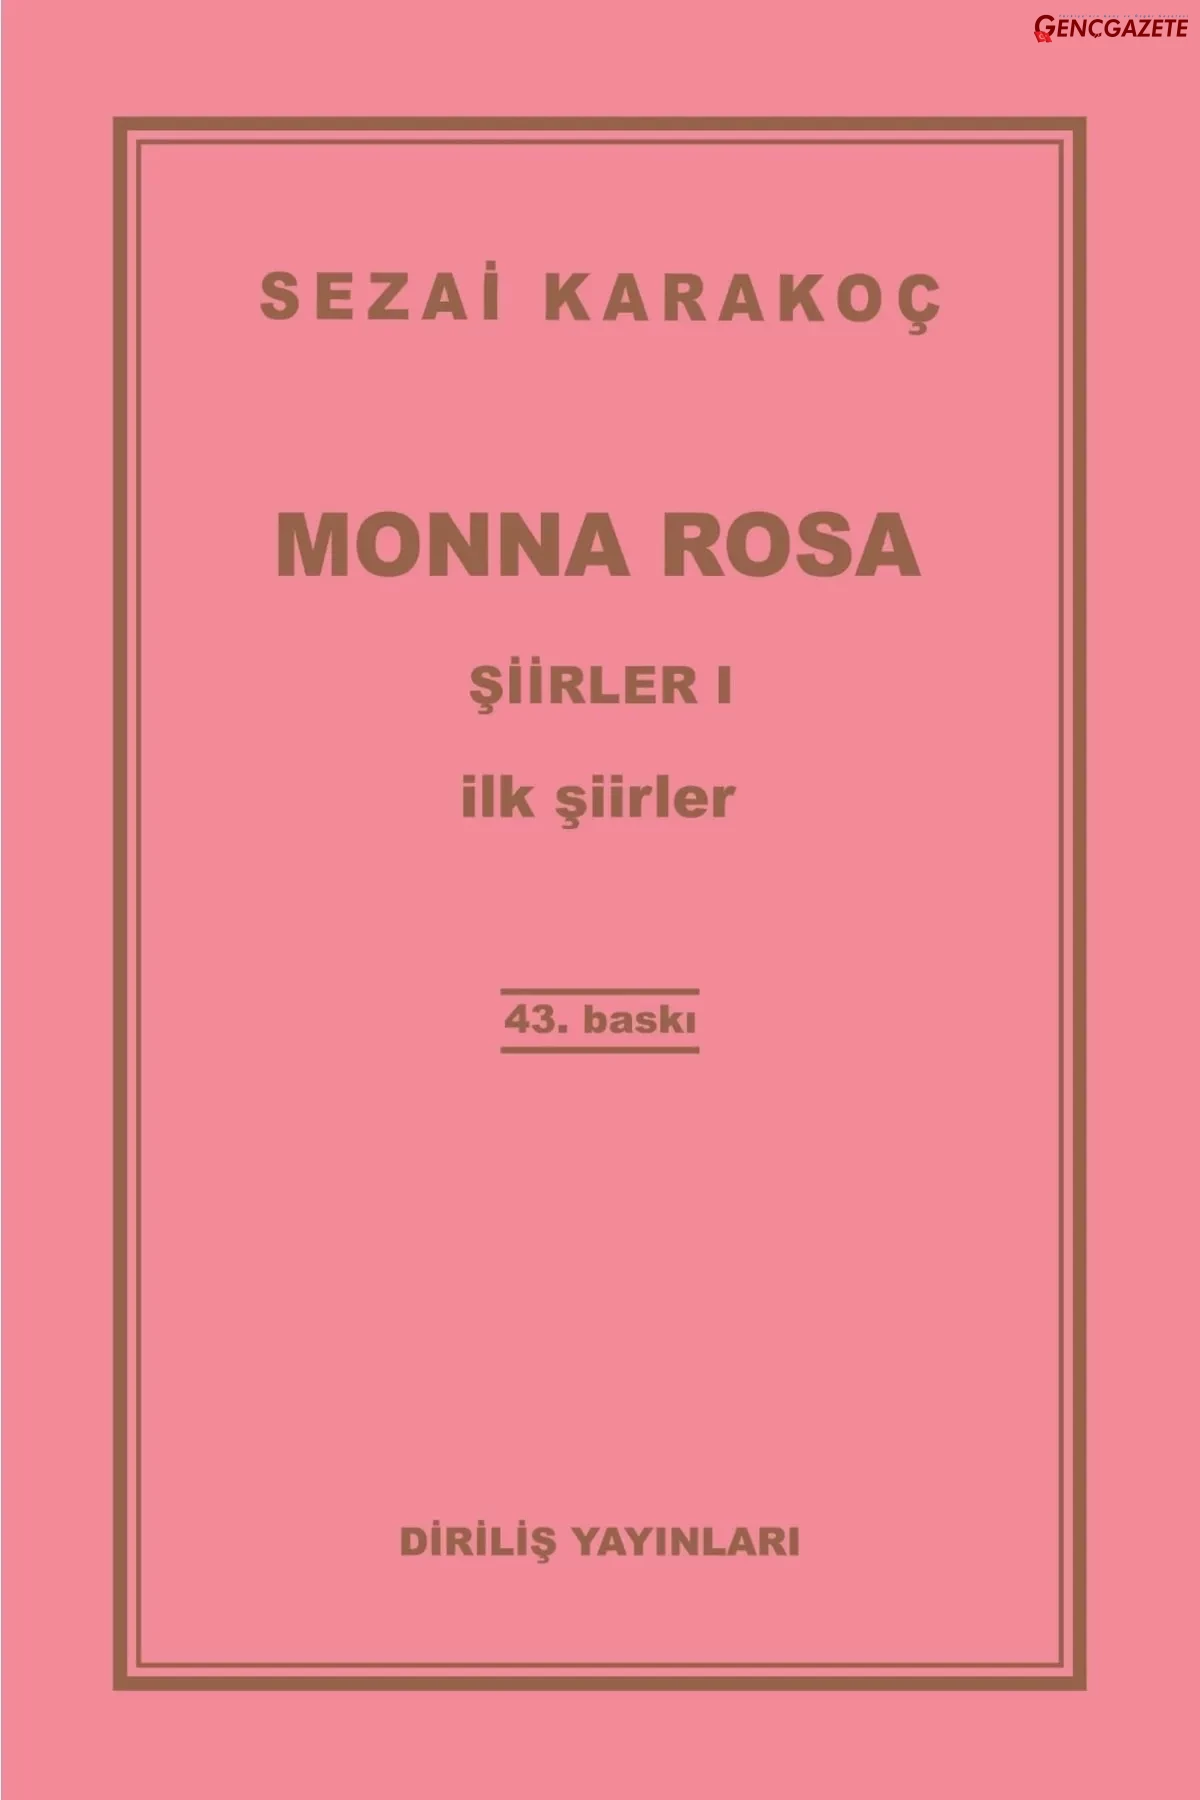 Genç Gazete Mona Roza Sezai Karakoç (5)